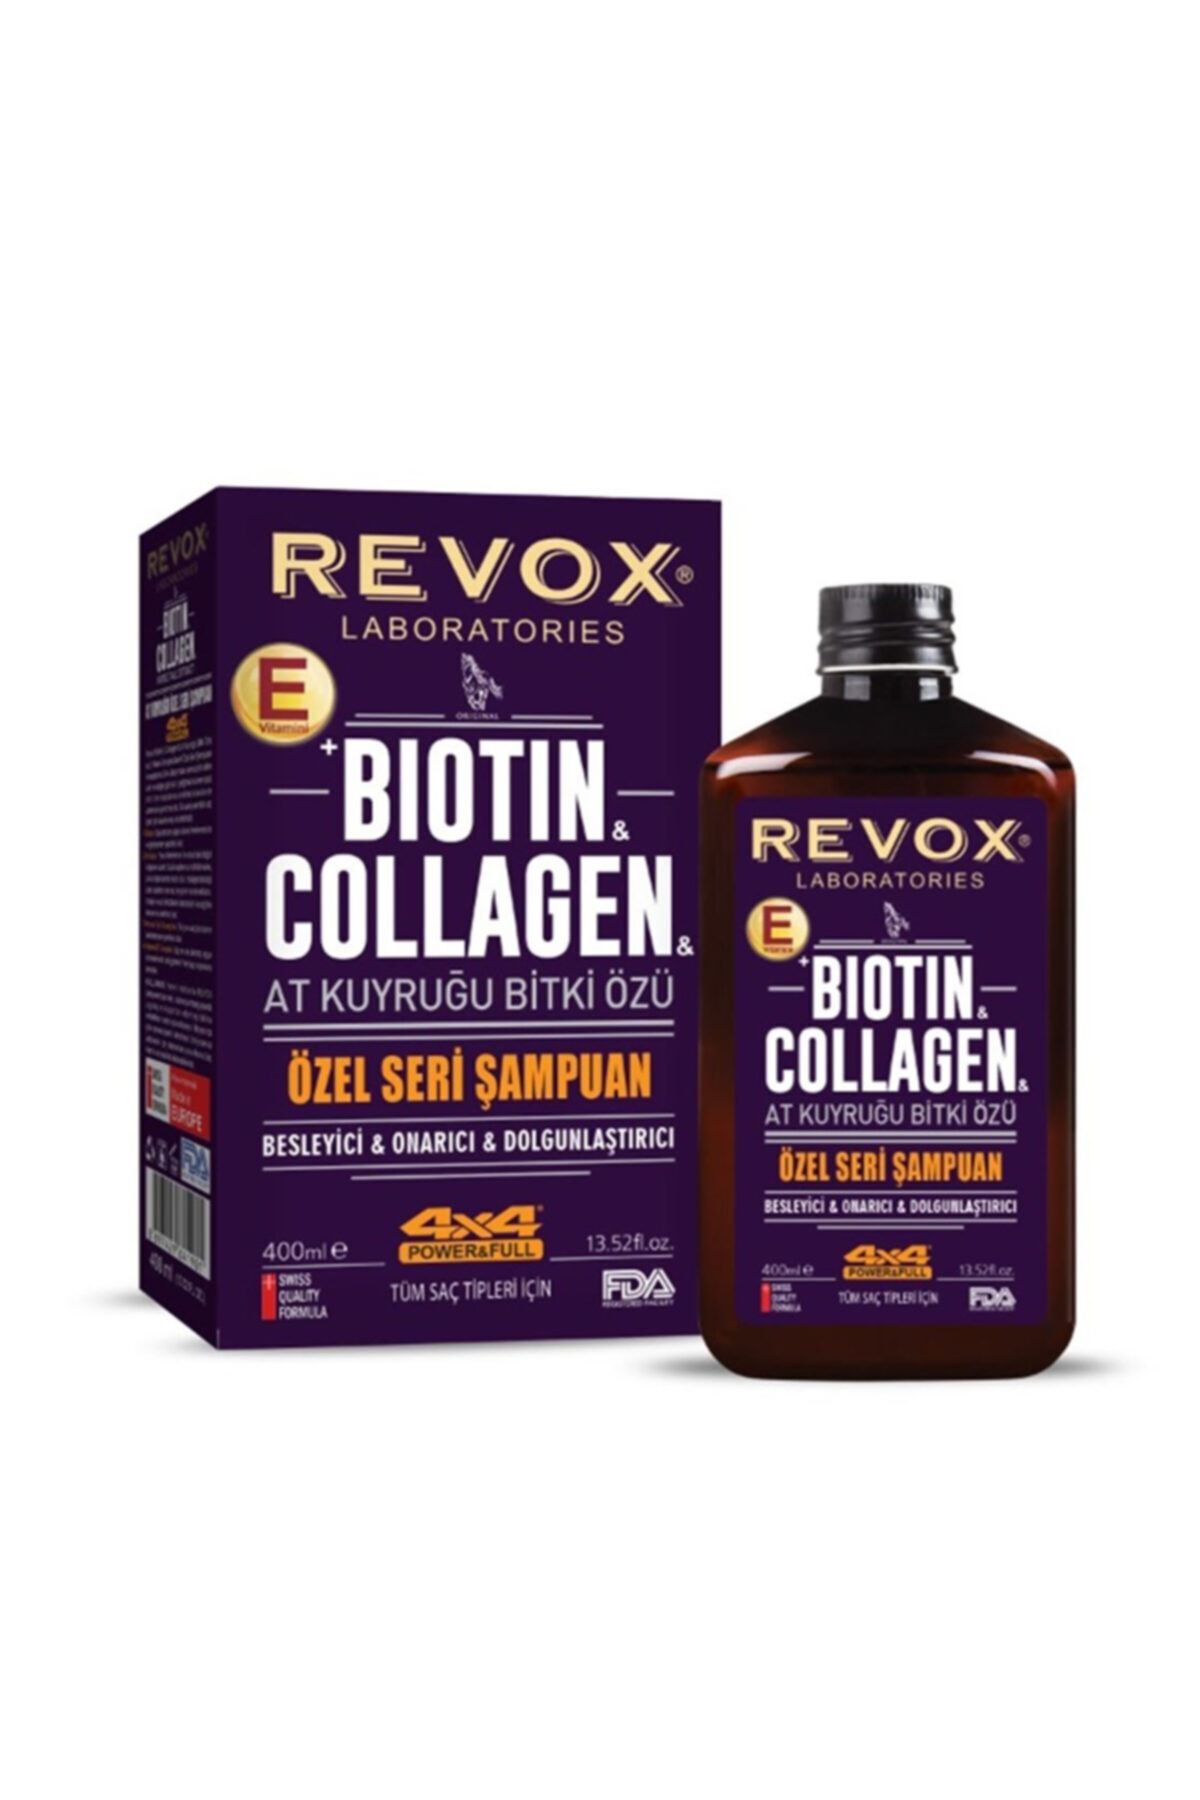 Revox At Kuyruğu Bitki Özü Biotin Collagen Özel Seri Şampuan 400 ml